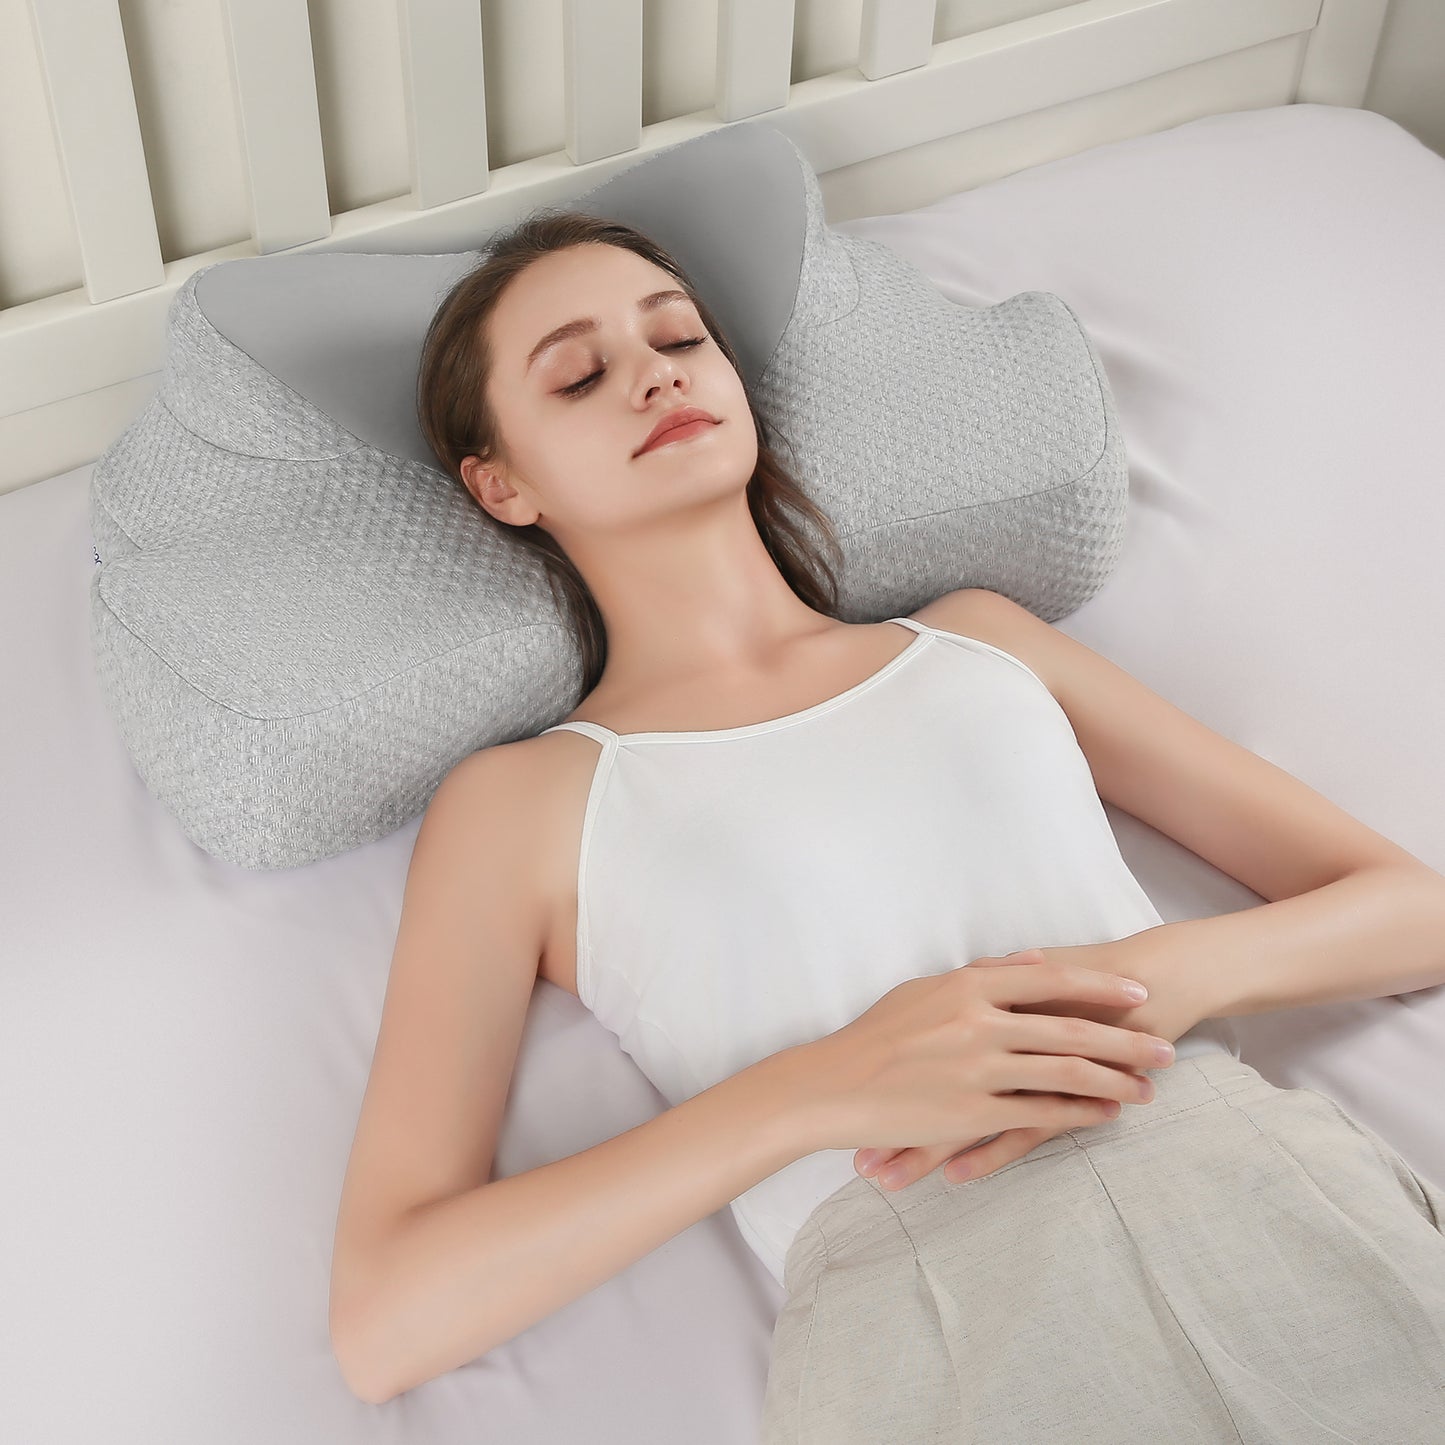 Cervical Pillow Neck Pillow for Pain Relief